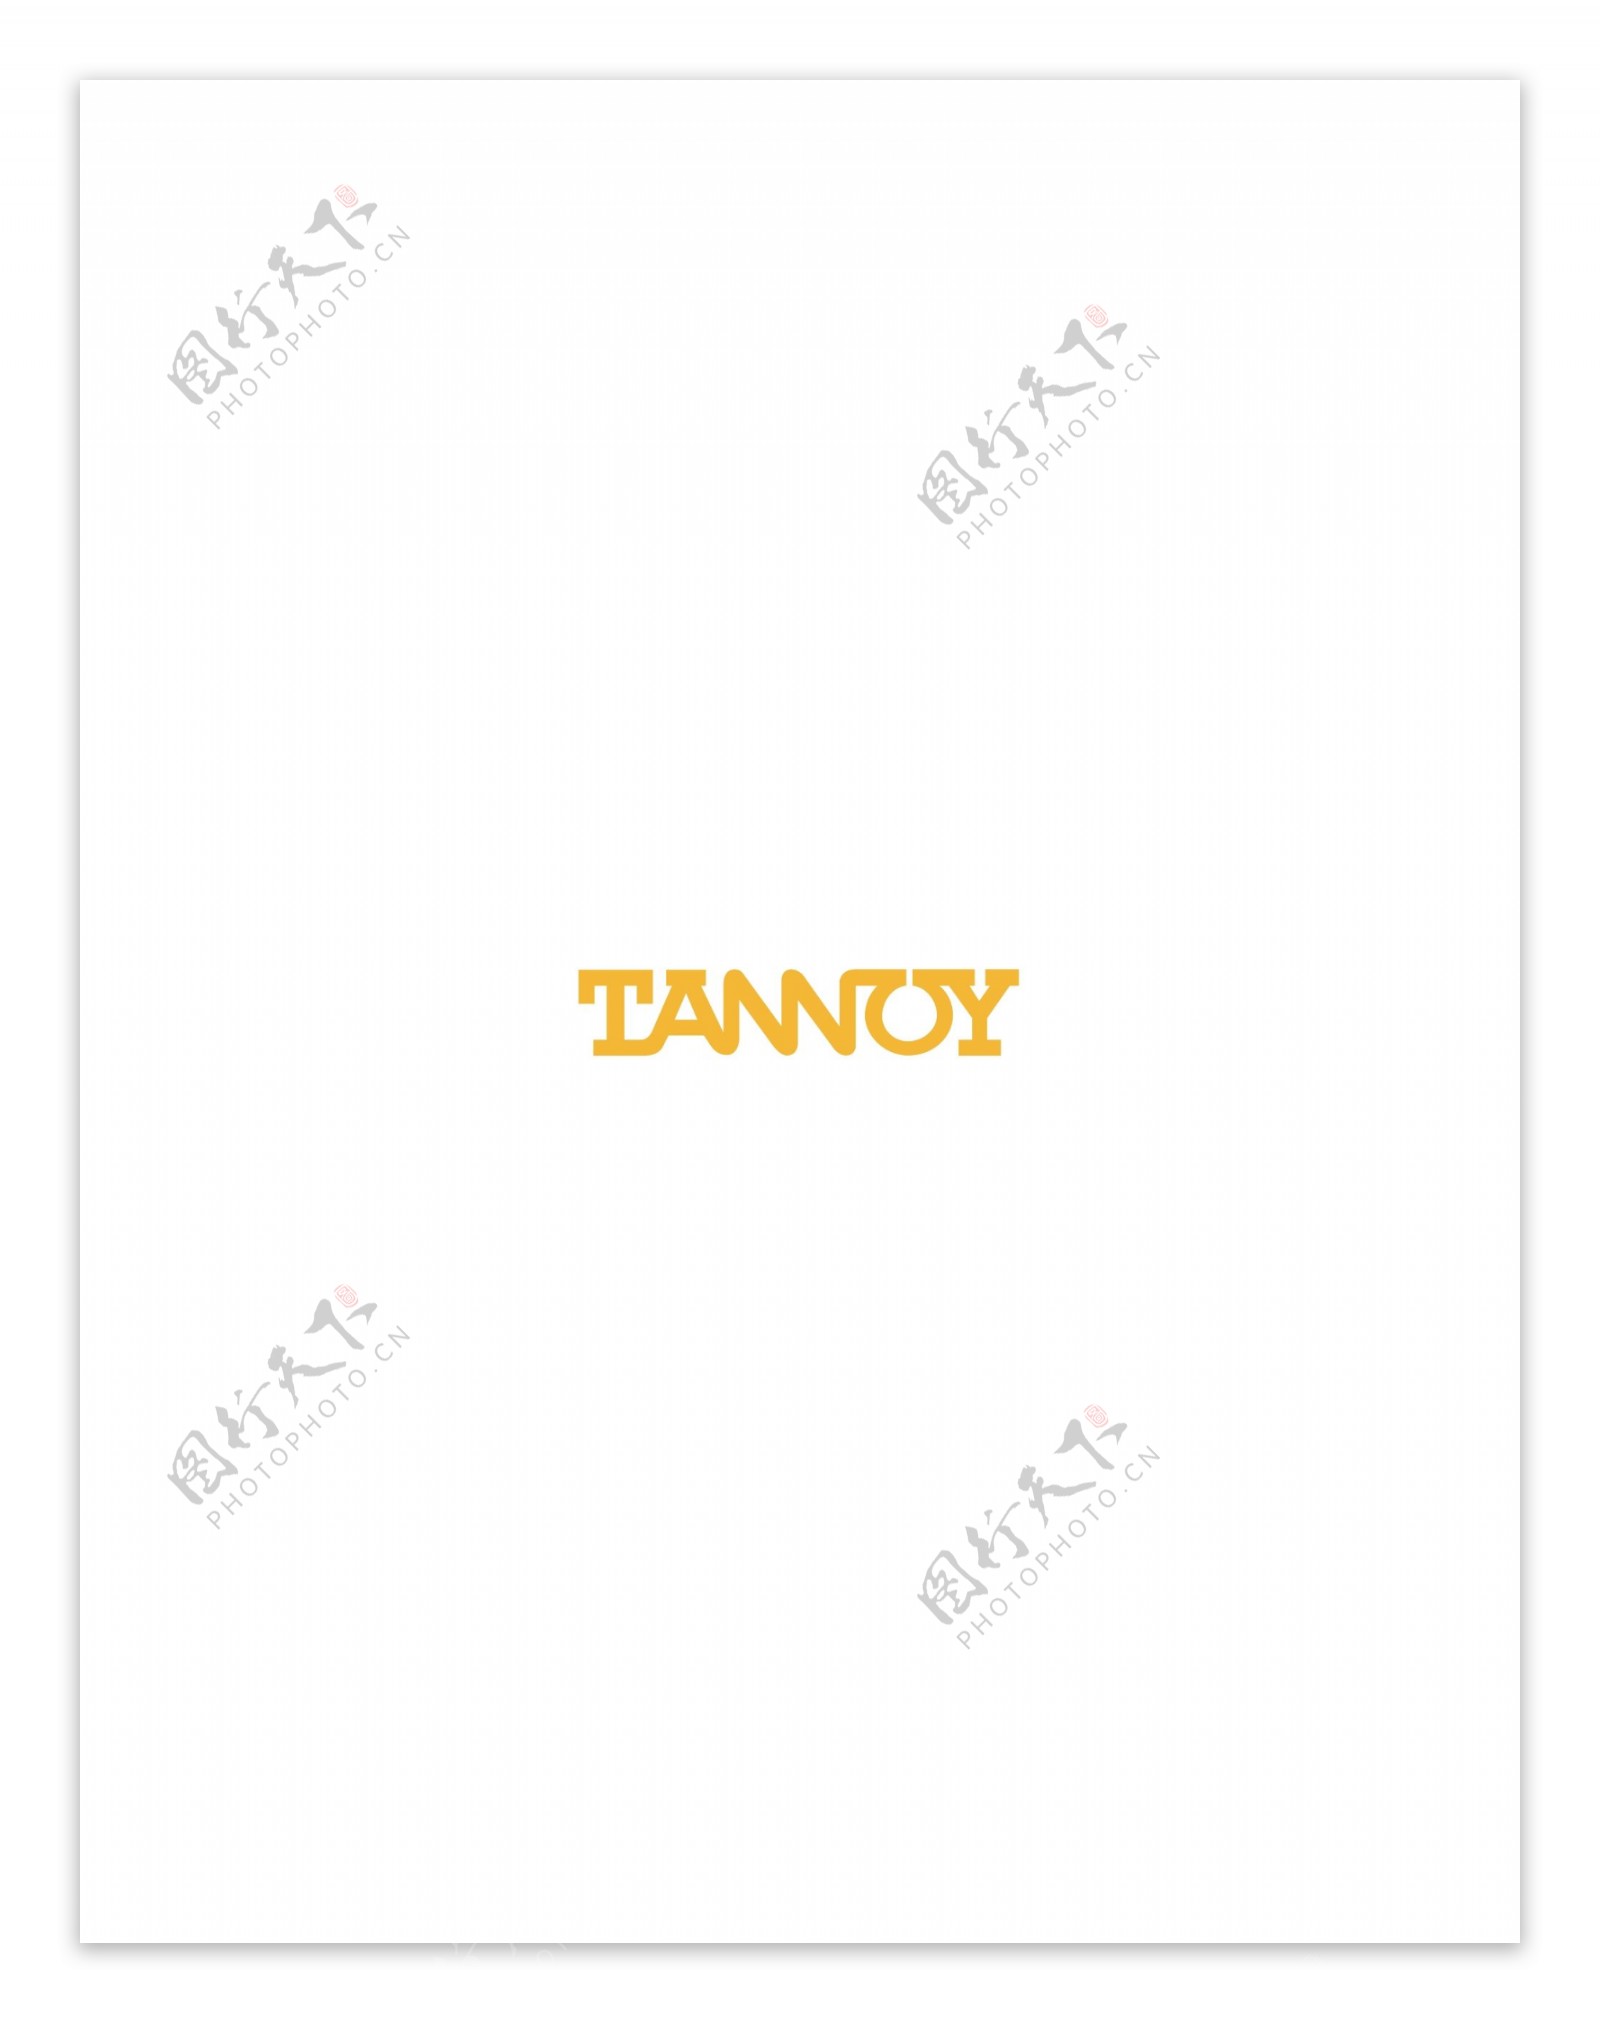 Tannoylogo设计欣赏国外知名公司标志范例Tannoy下载标志设计欣赏